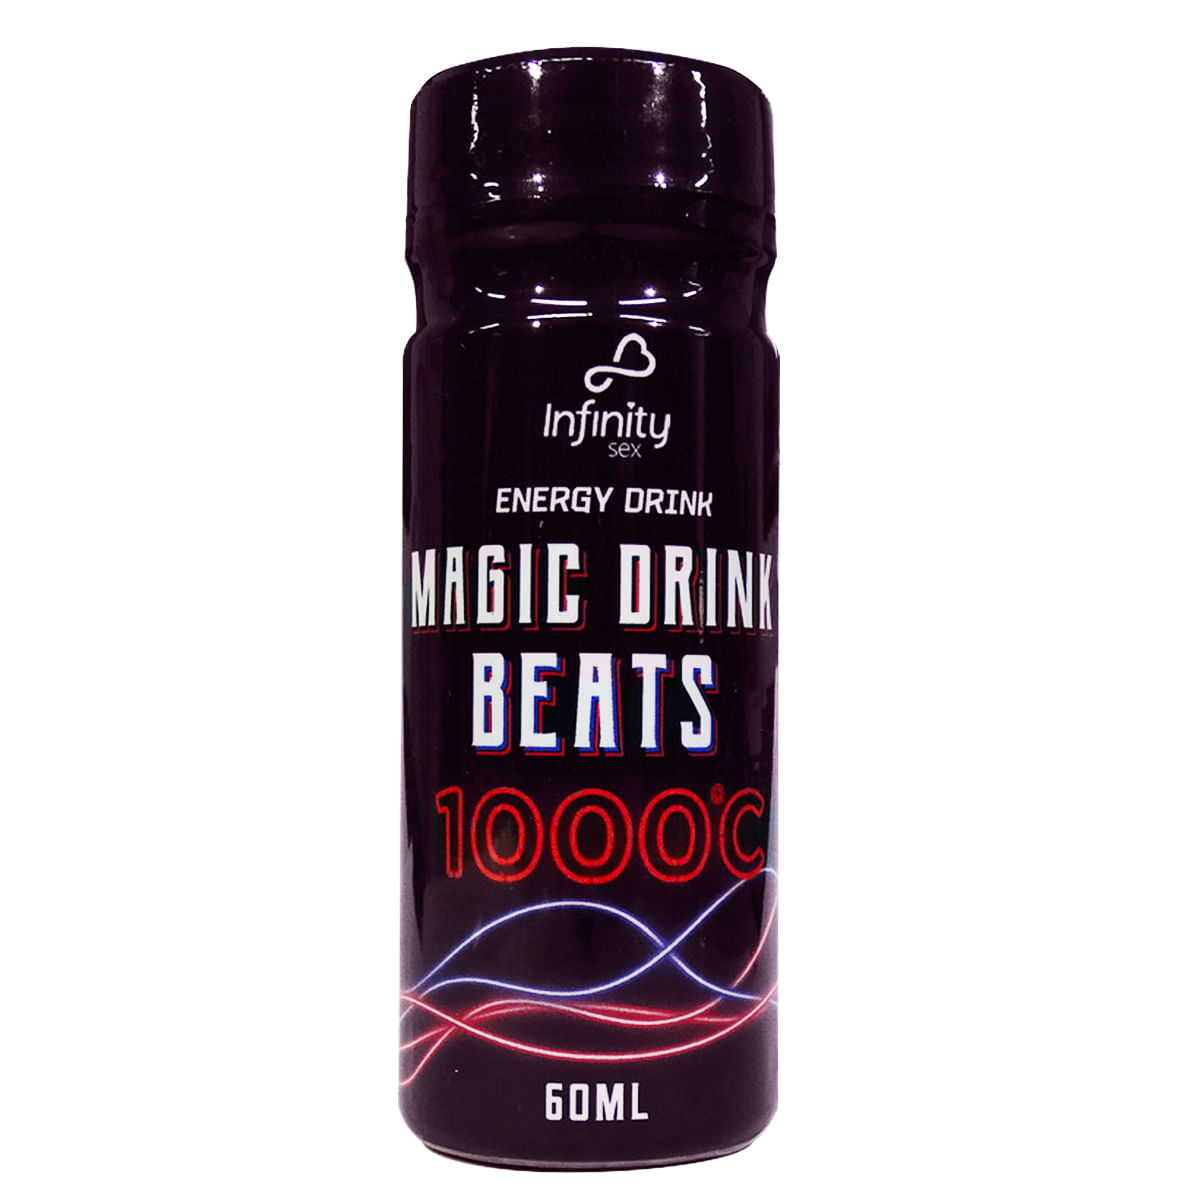 Magic Drink 1000C Energy Drink Energético Alcóolico 60ml Linha Beats Infinity Sex